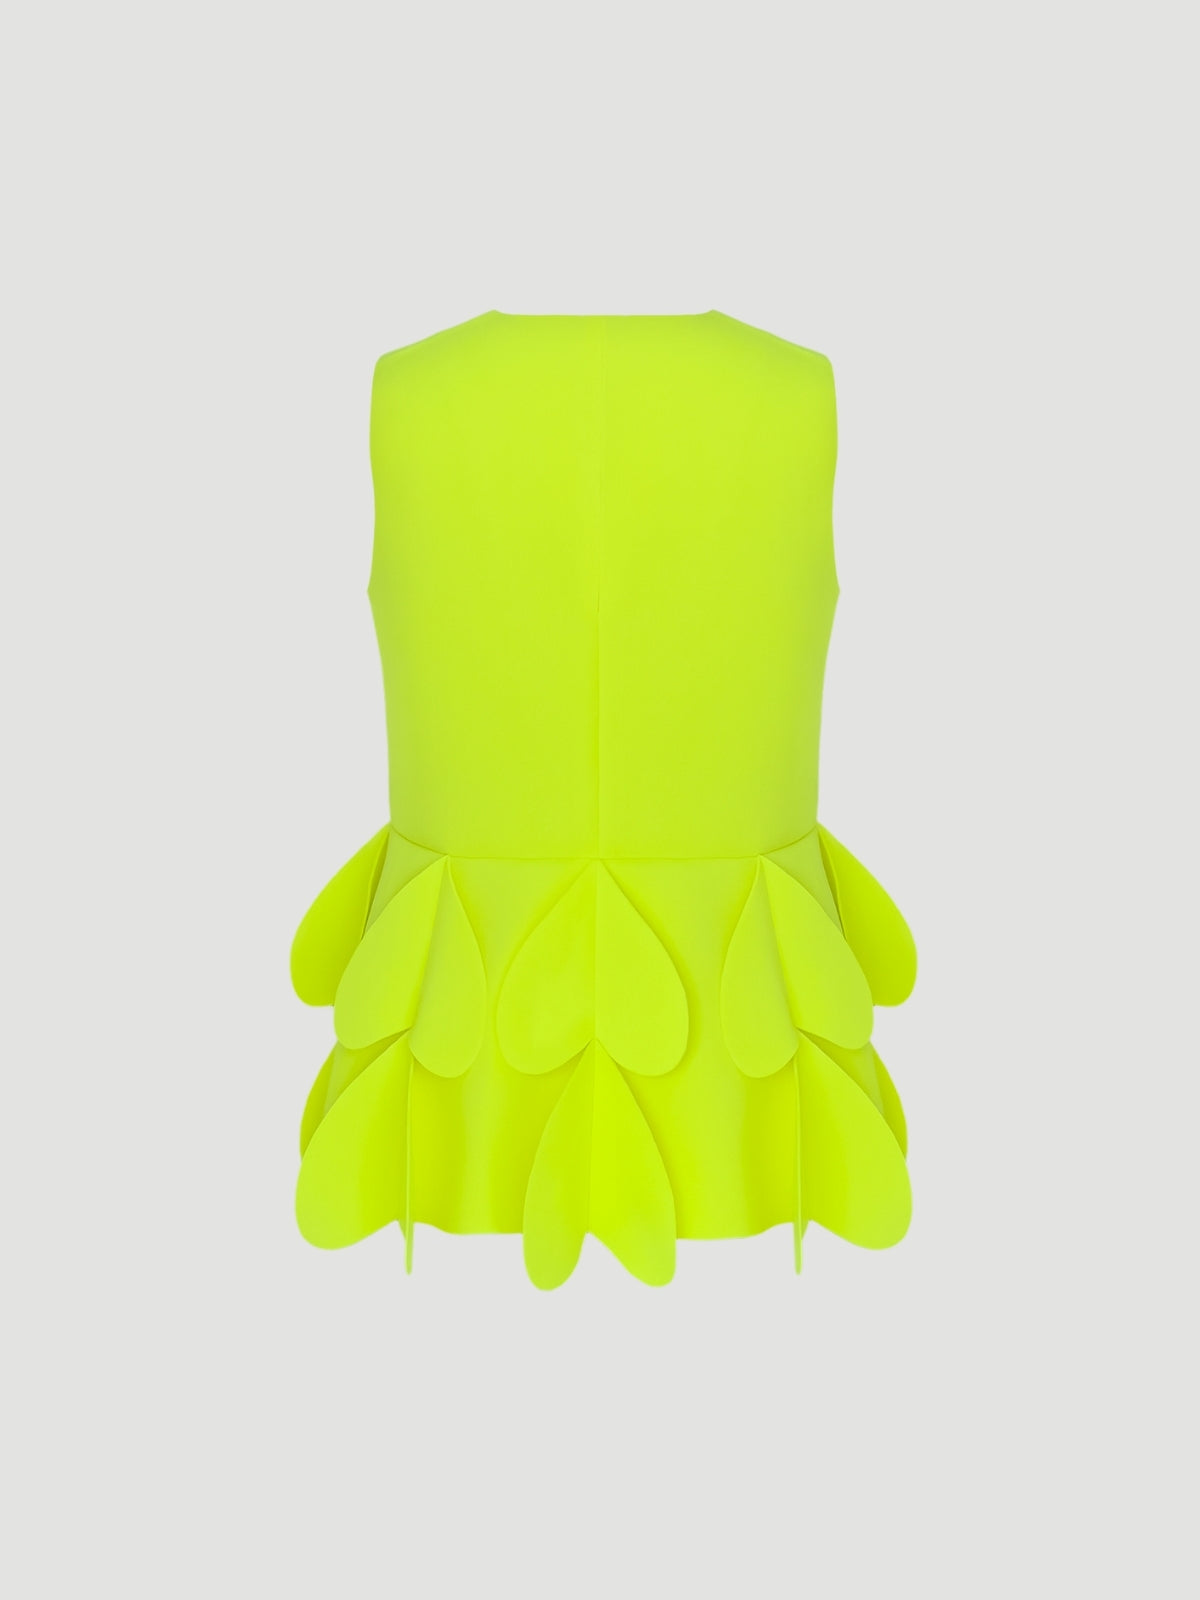 Neon yellow Gion sleeveless top